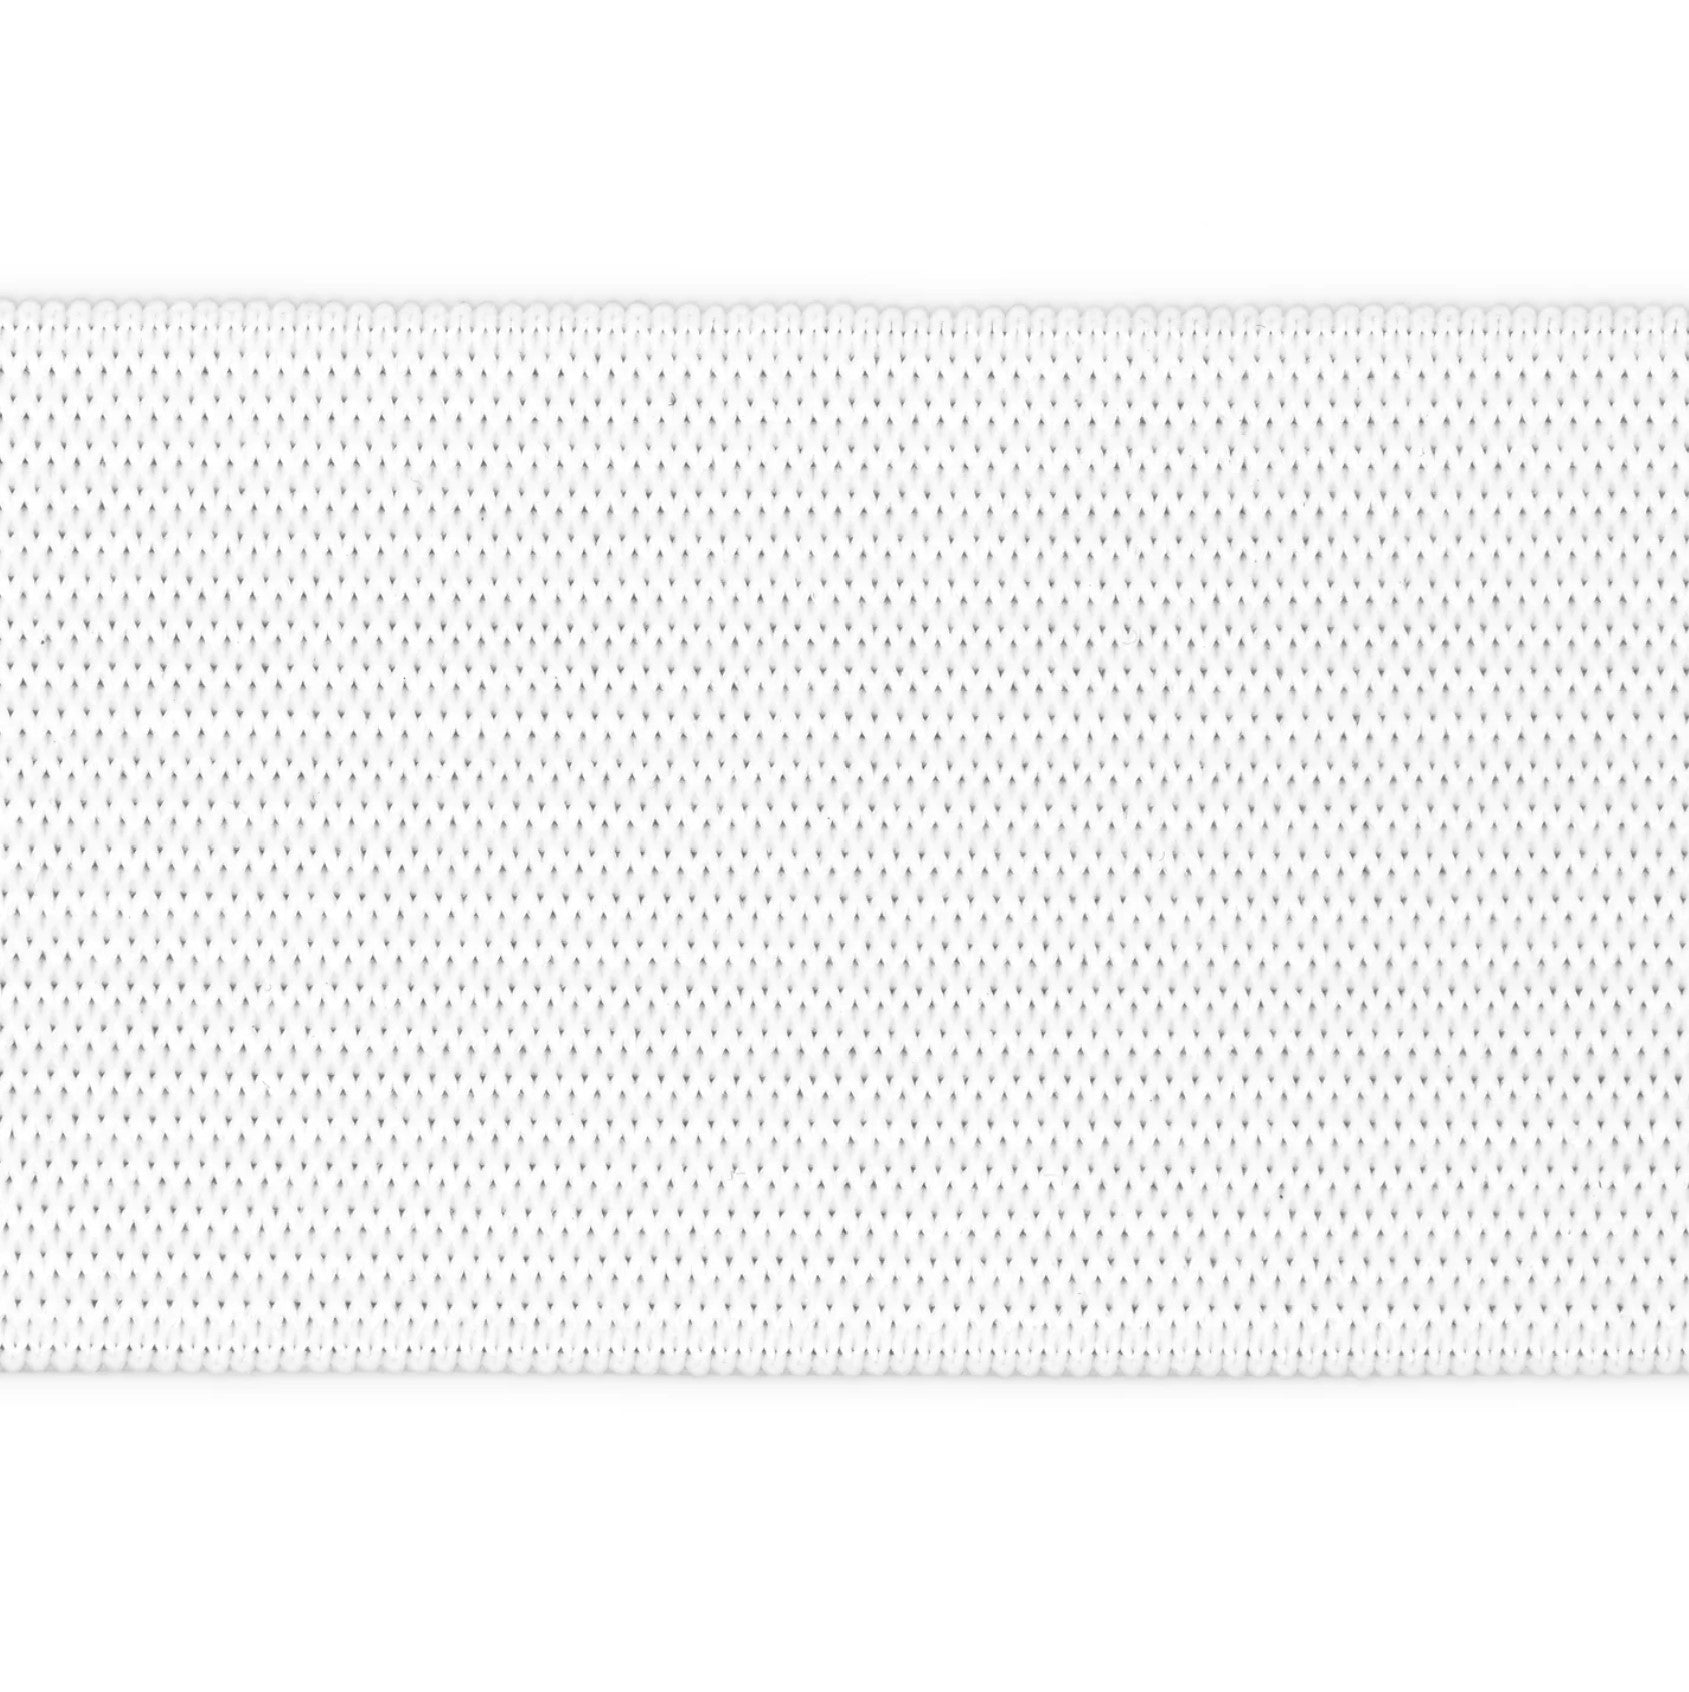 White Heavy Stretch Waistband Elastic (1.5 in x 1-1/4 yds) -- Ref. 9319W -- by Drittz®